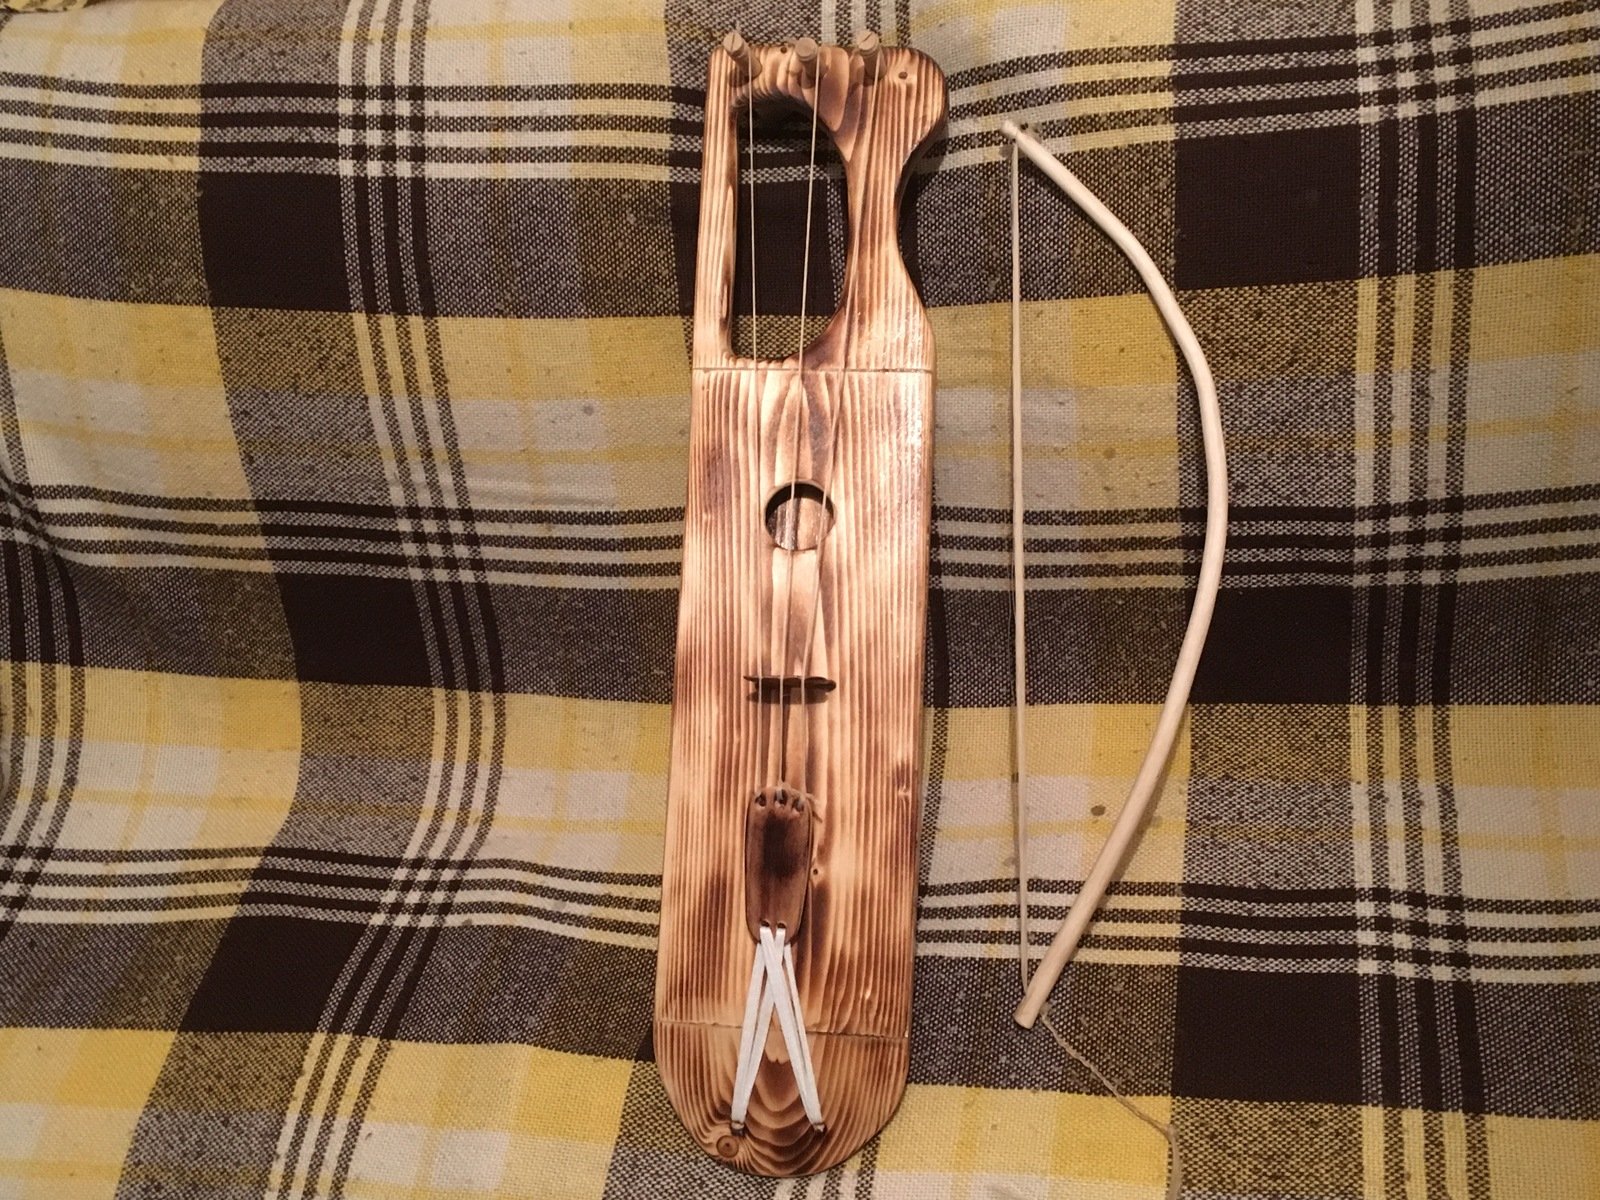 Музыкальный инструмент карелии. Йоухикко. Тальхарпа музыкальный инструмент. Йоухикко музыкальный инструмент.